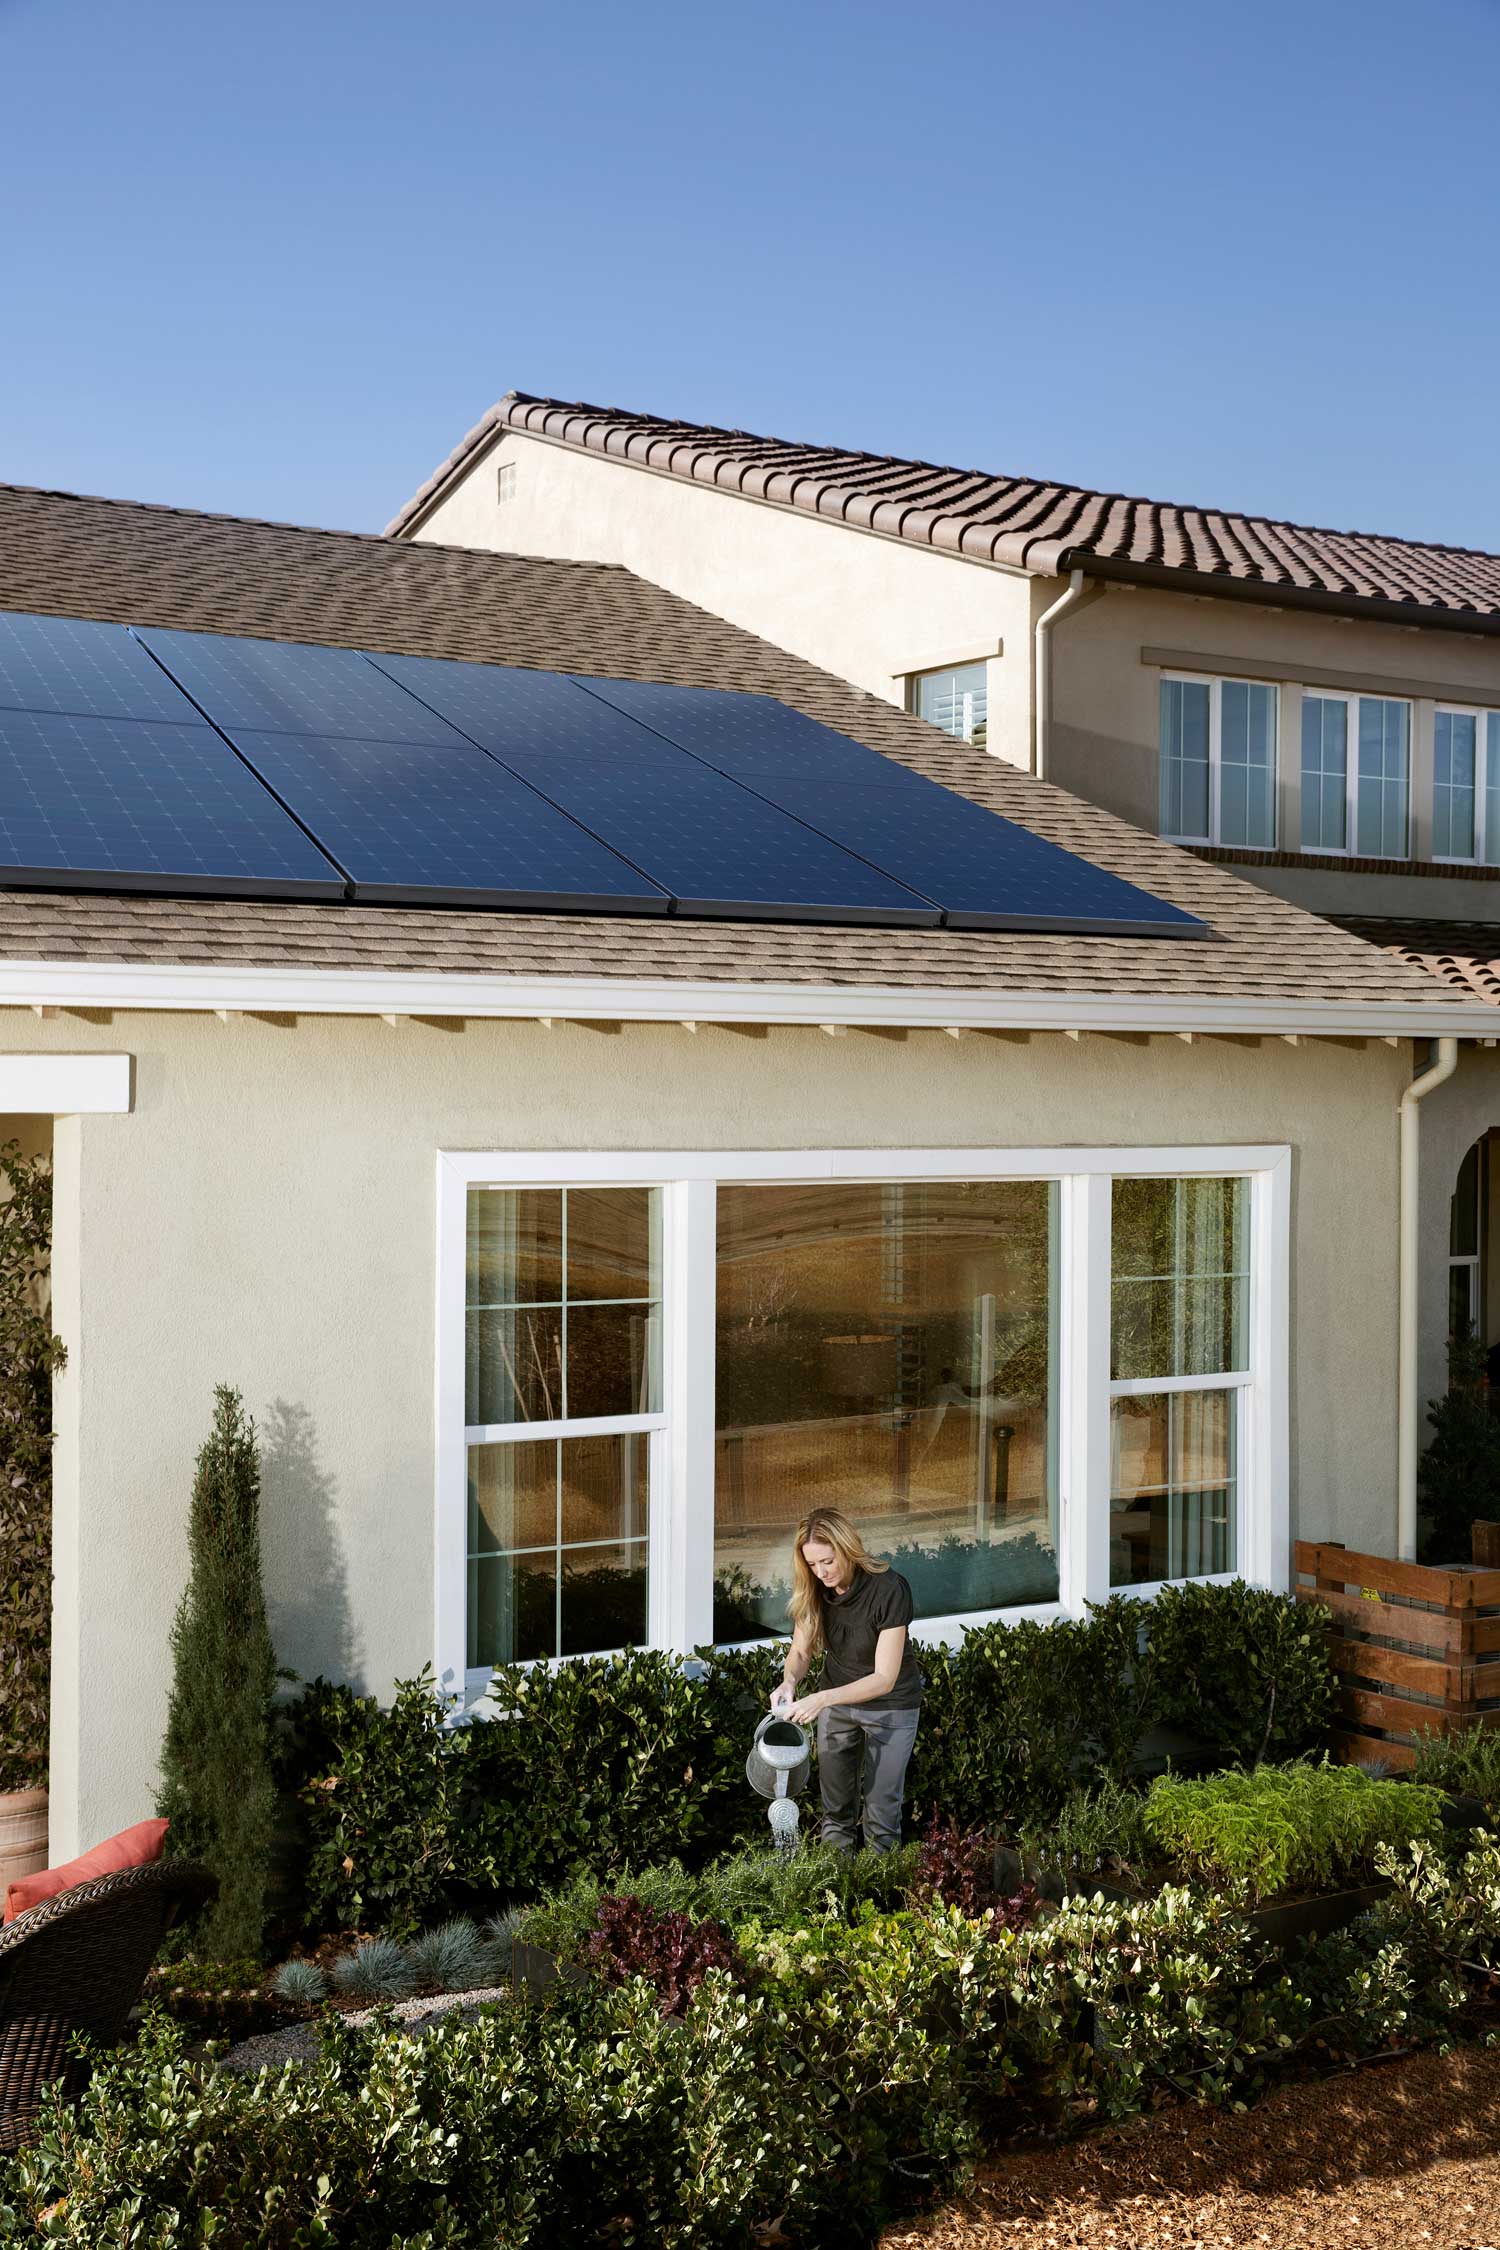 Choose Solar Energy Partners for your solar panel installation in SC & GA.